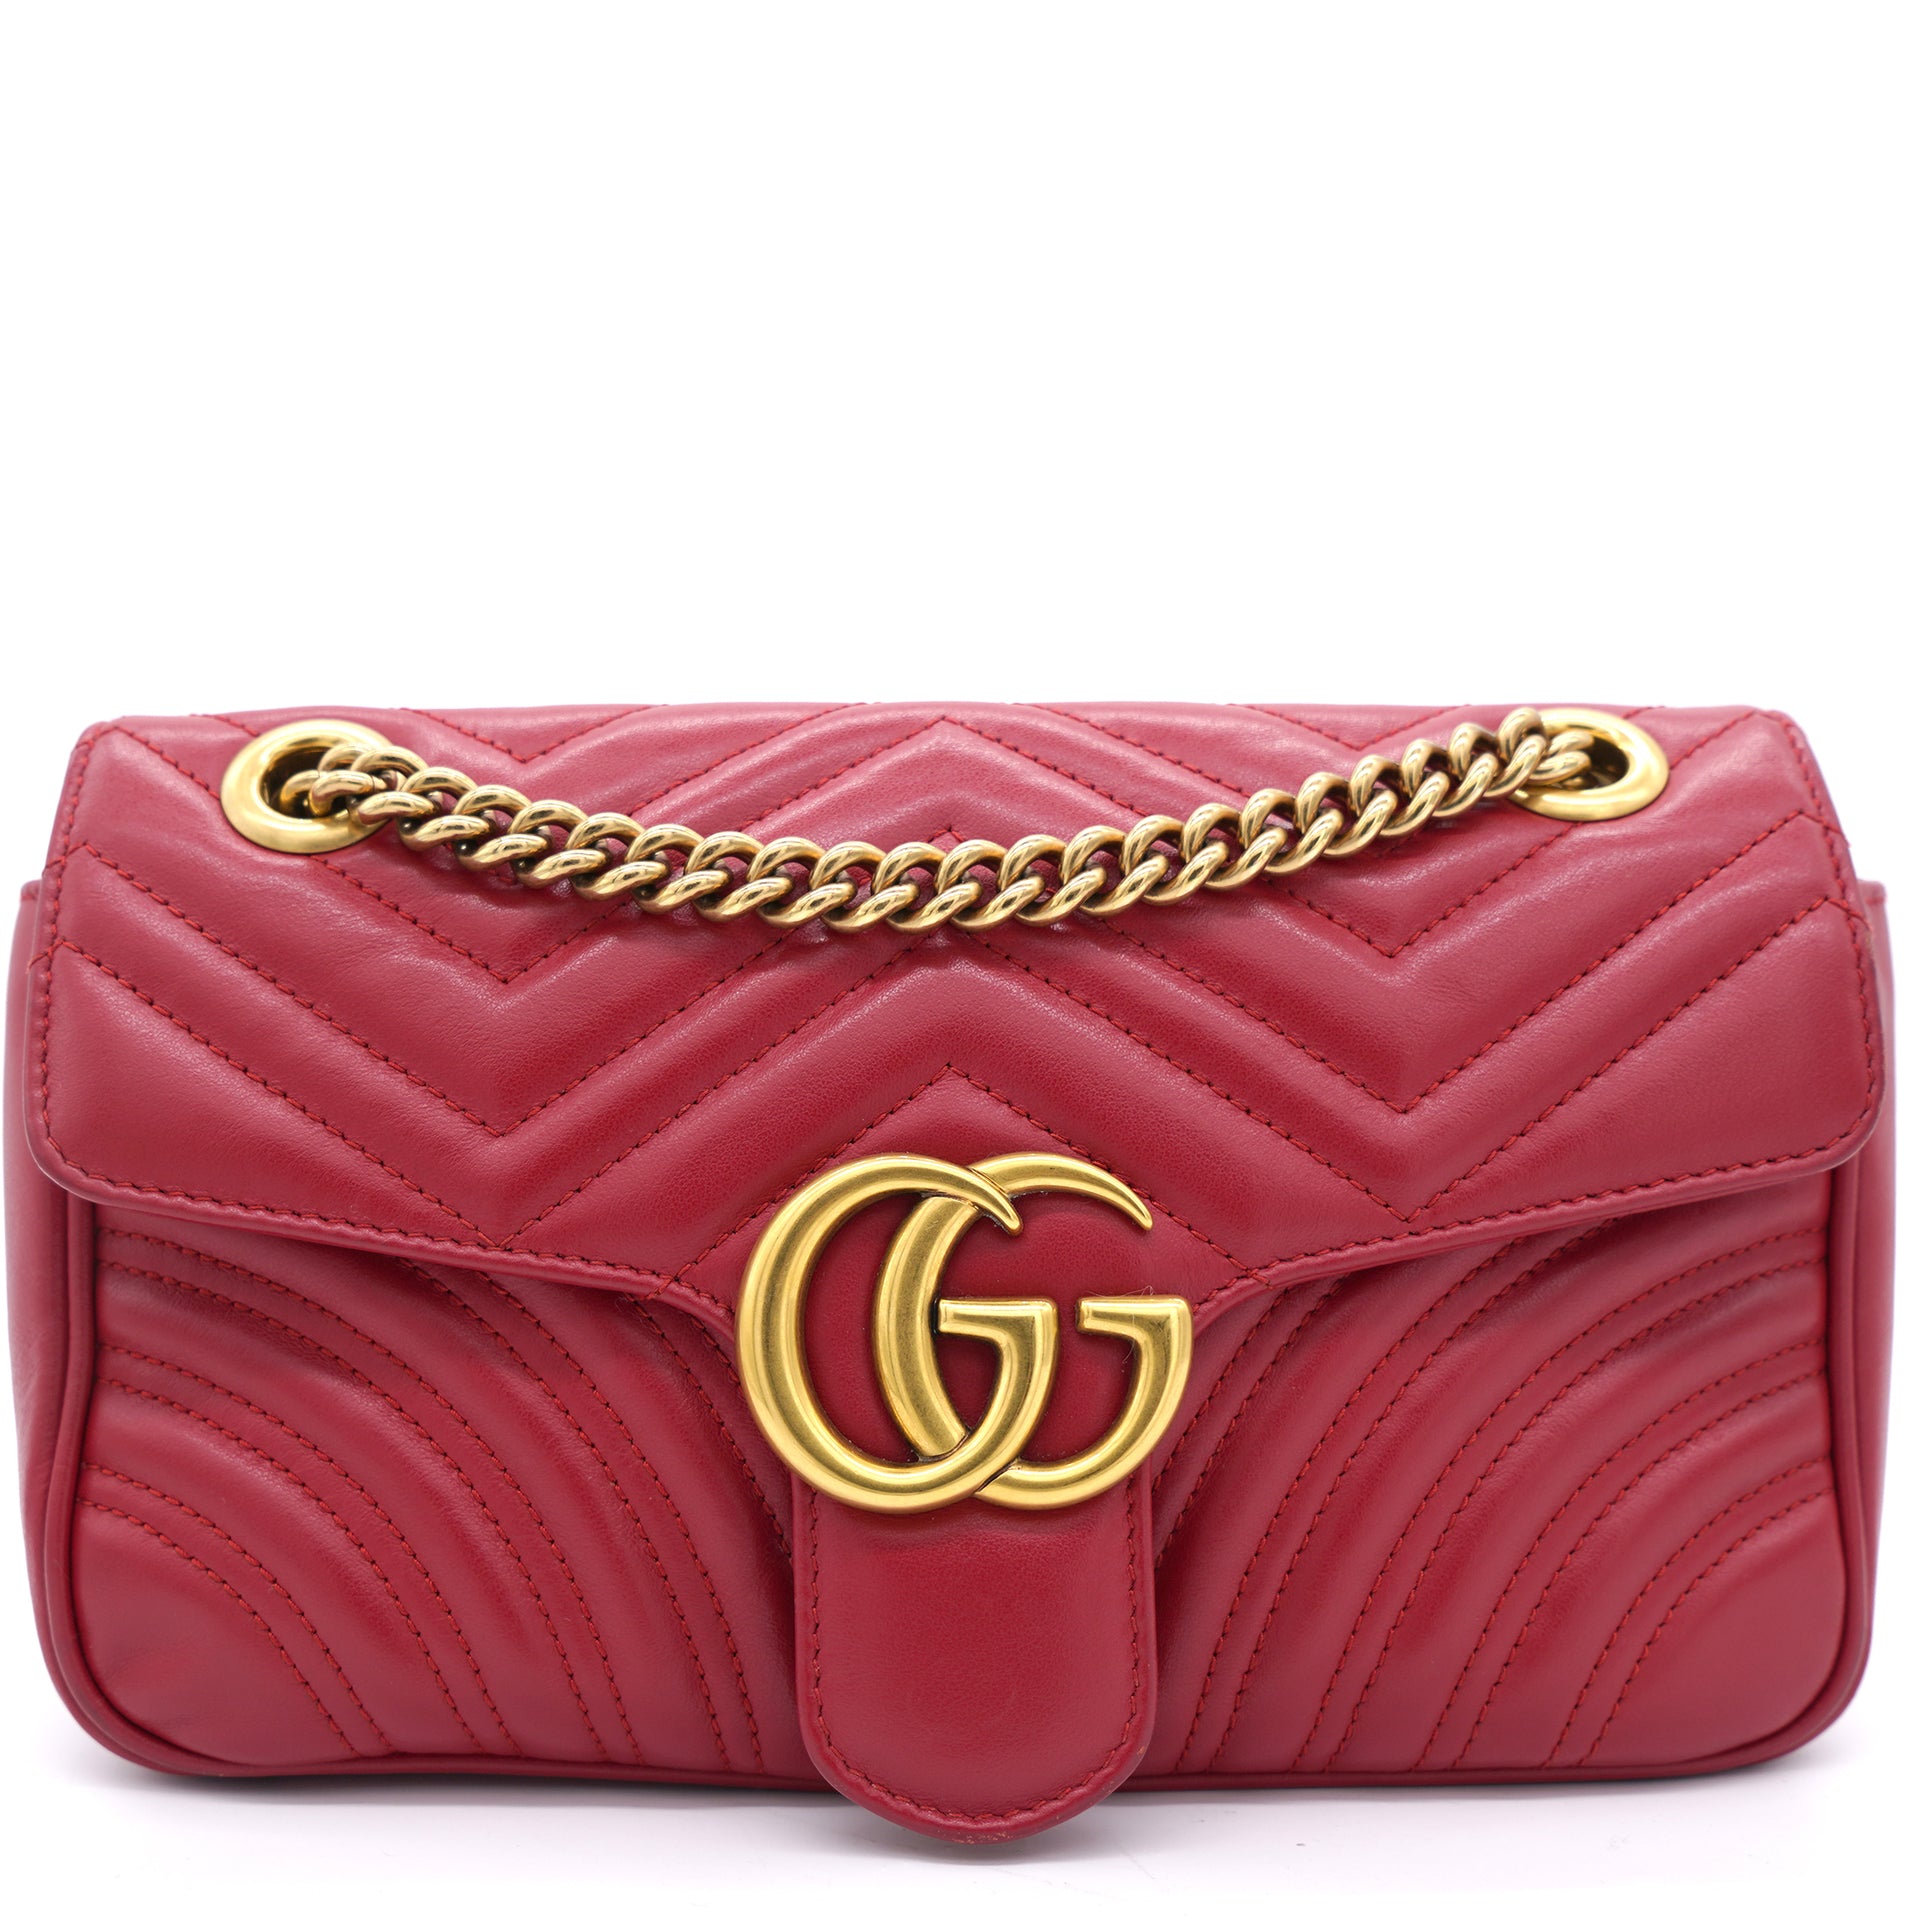 Gucci GG marmont matelasse leather super mini bag. Hibiscus red chevron  leather | Gucci mini bag, Mini bag, Black gucci bag